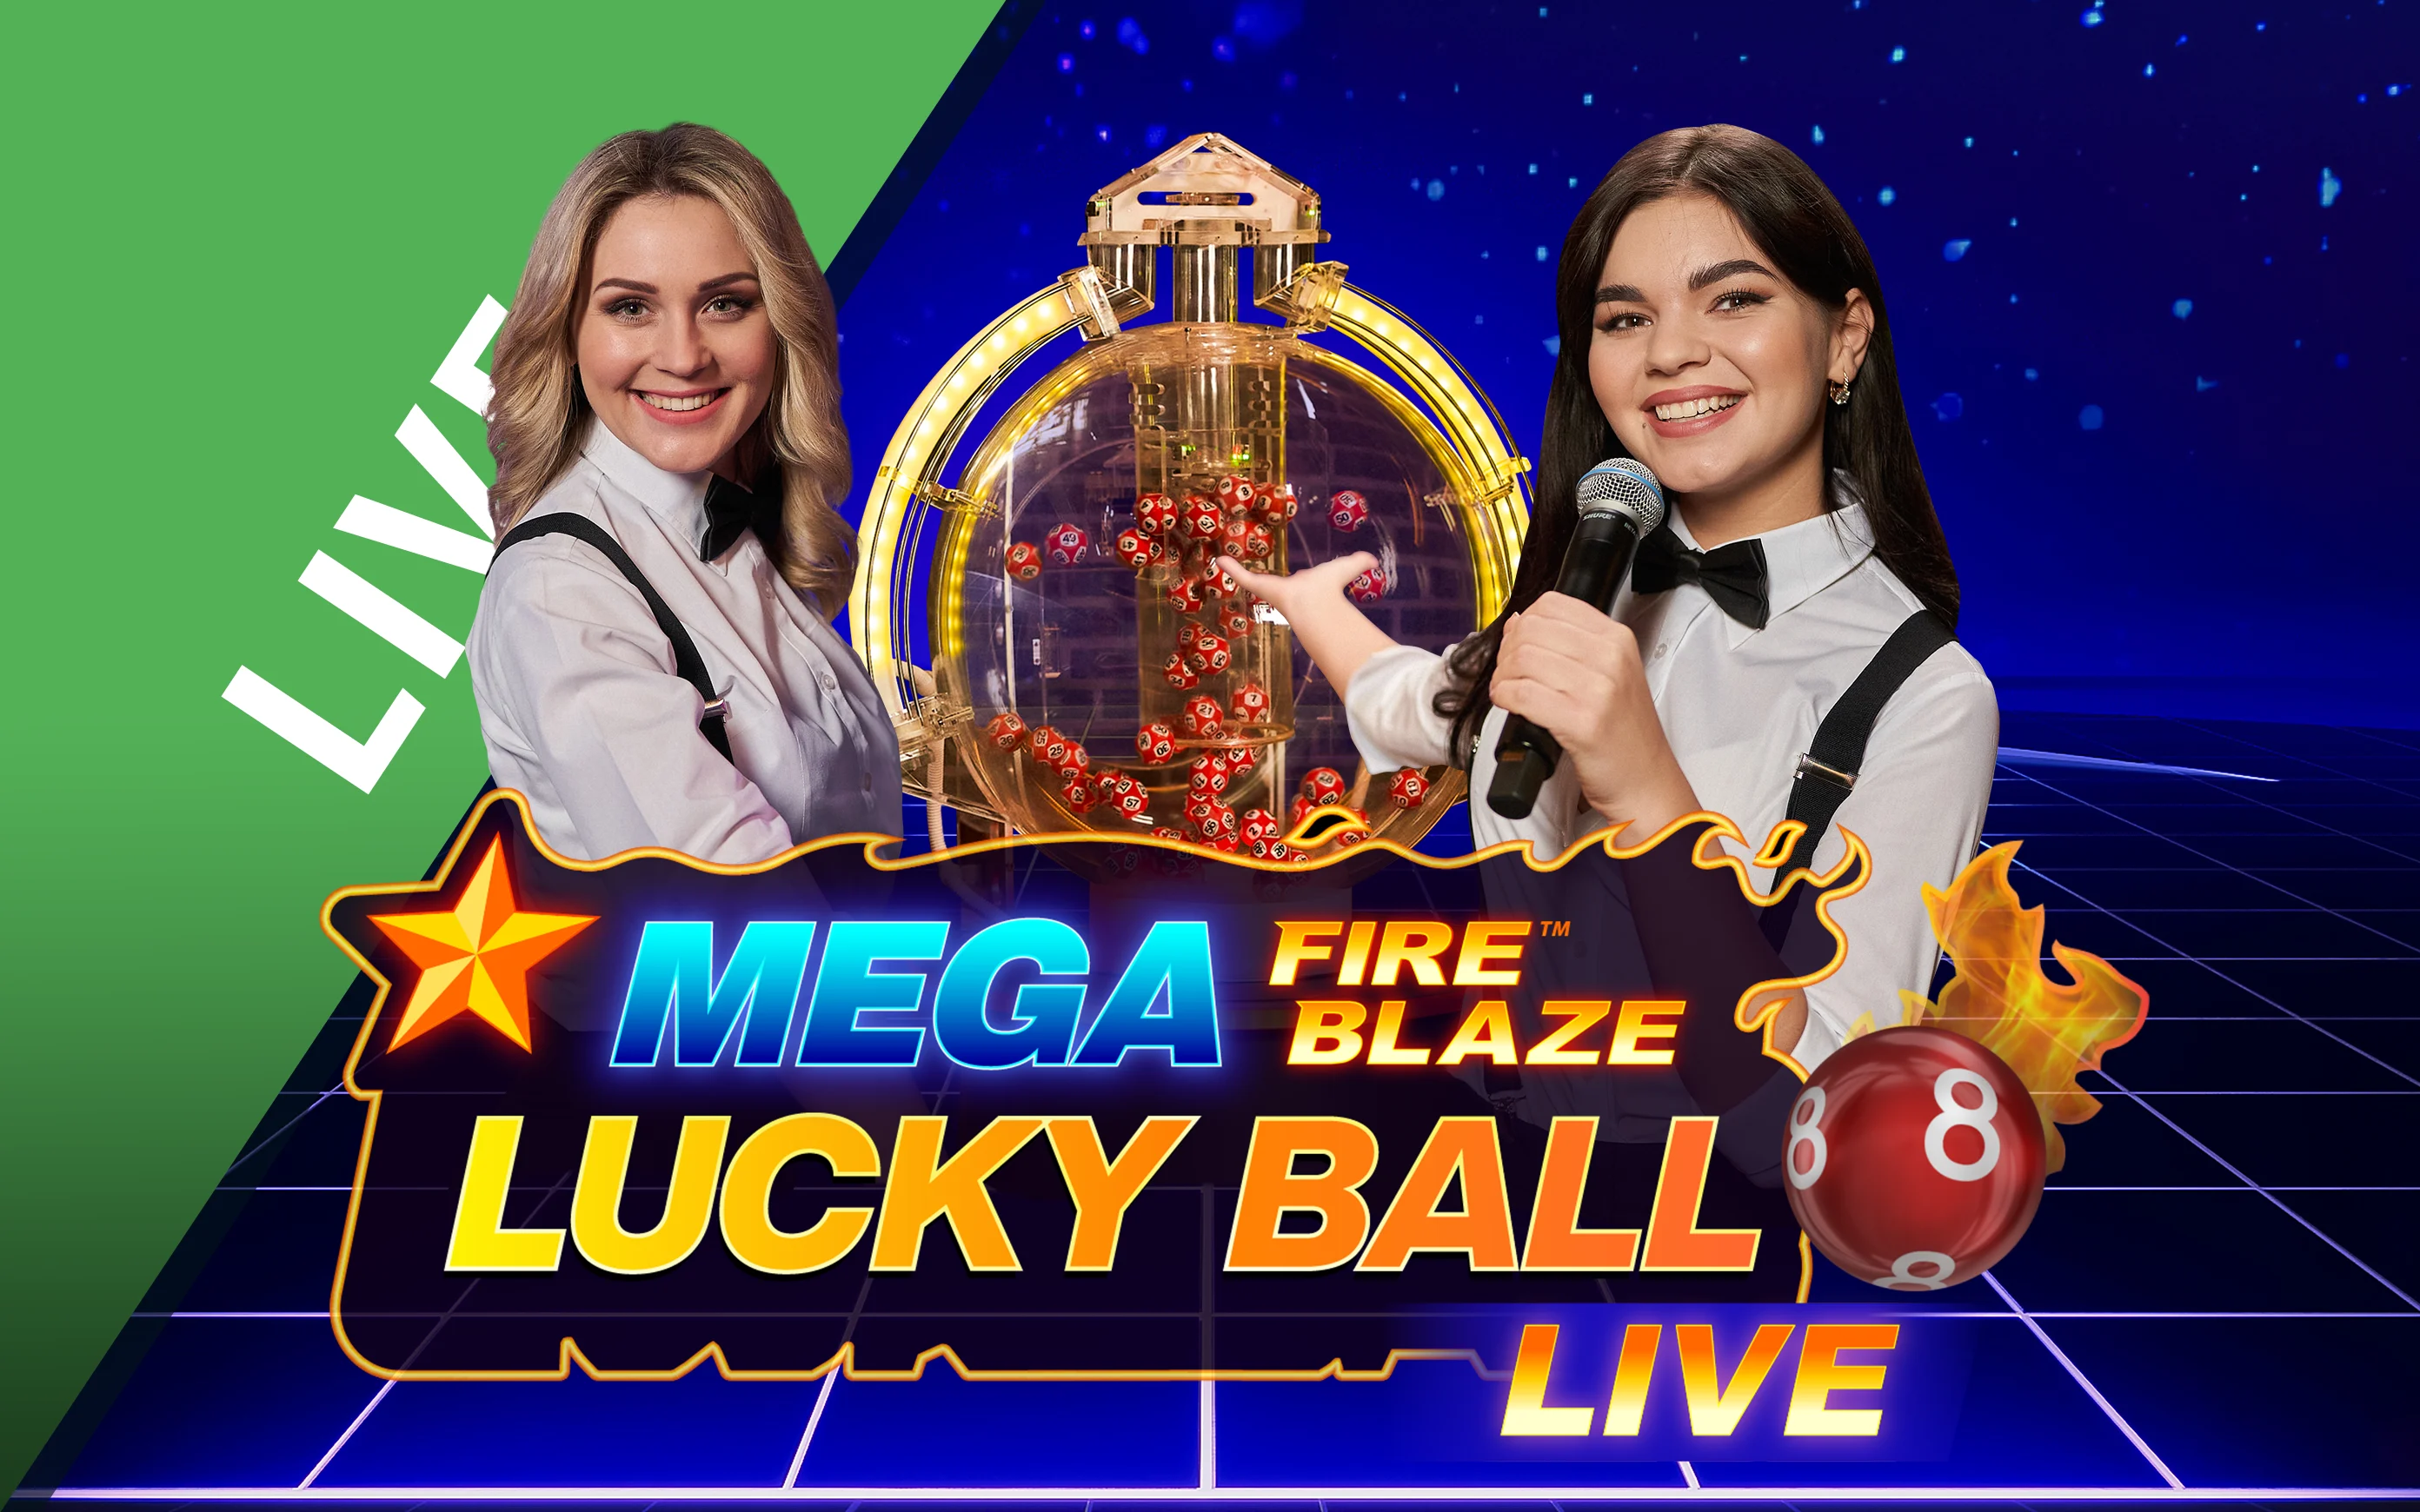 Play Mega Fire Blaze Lucky Ball Live on StarcasinoBE online casino